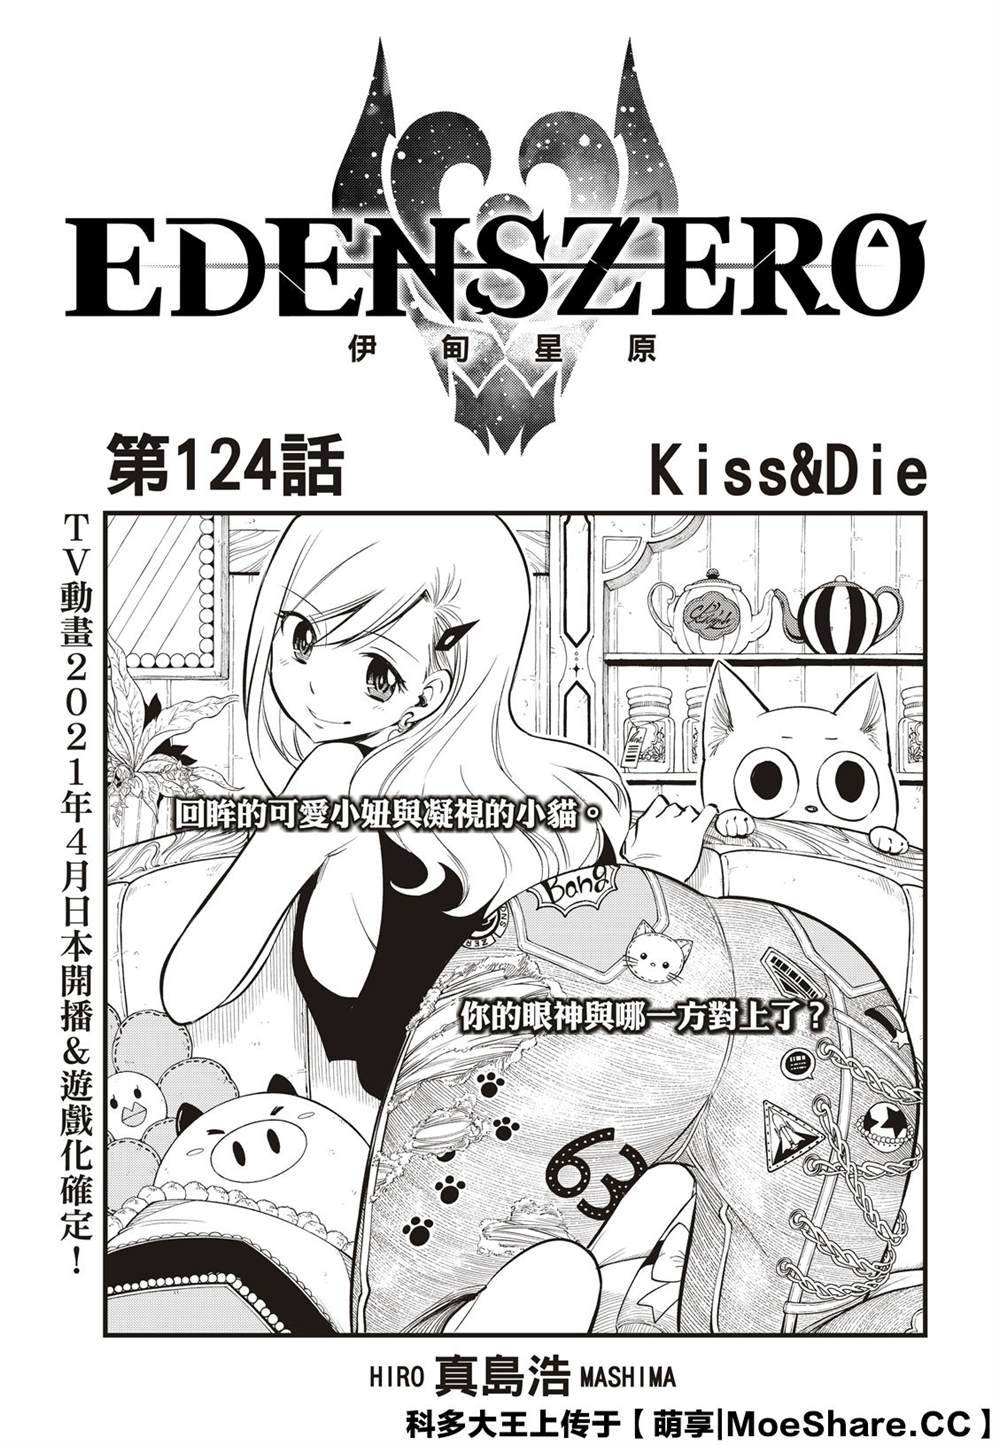 伊甸星原 EDEN'S ZERO - 第124話 Kiss&Die - 1